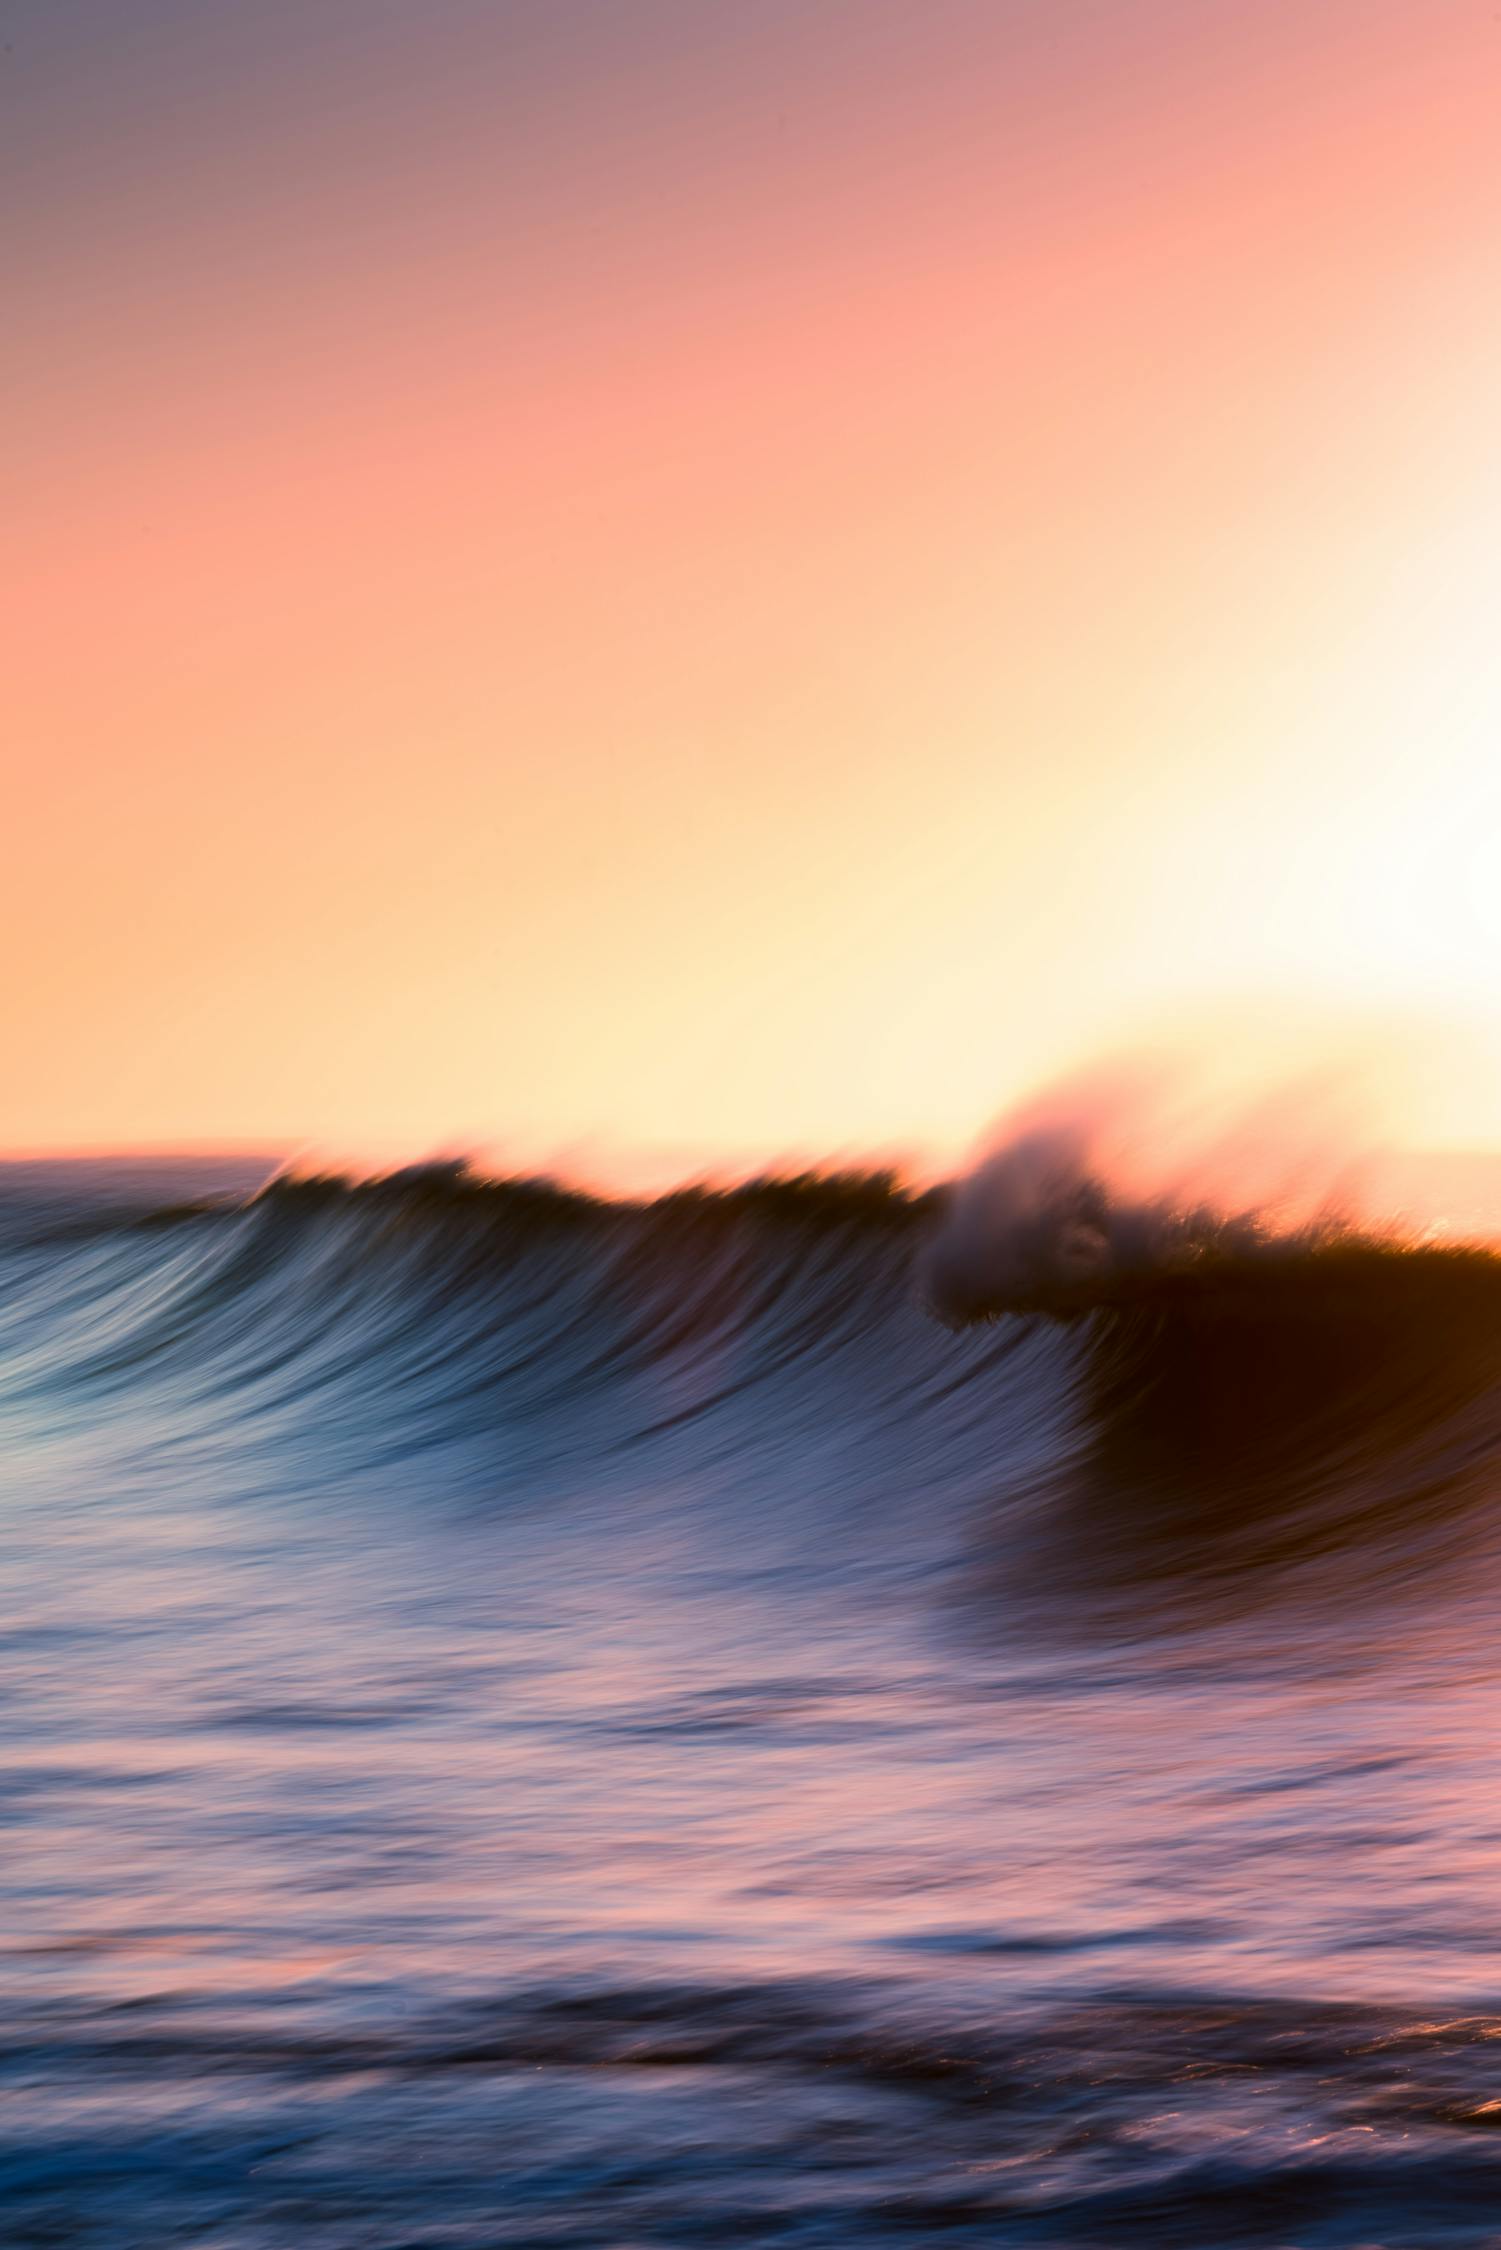 Foamy waves of ocean in shiny sunset · Free Stock Photo